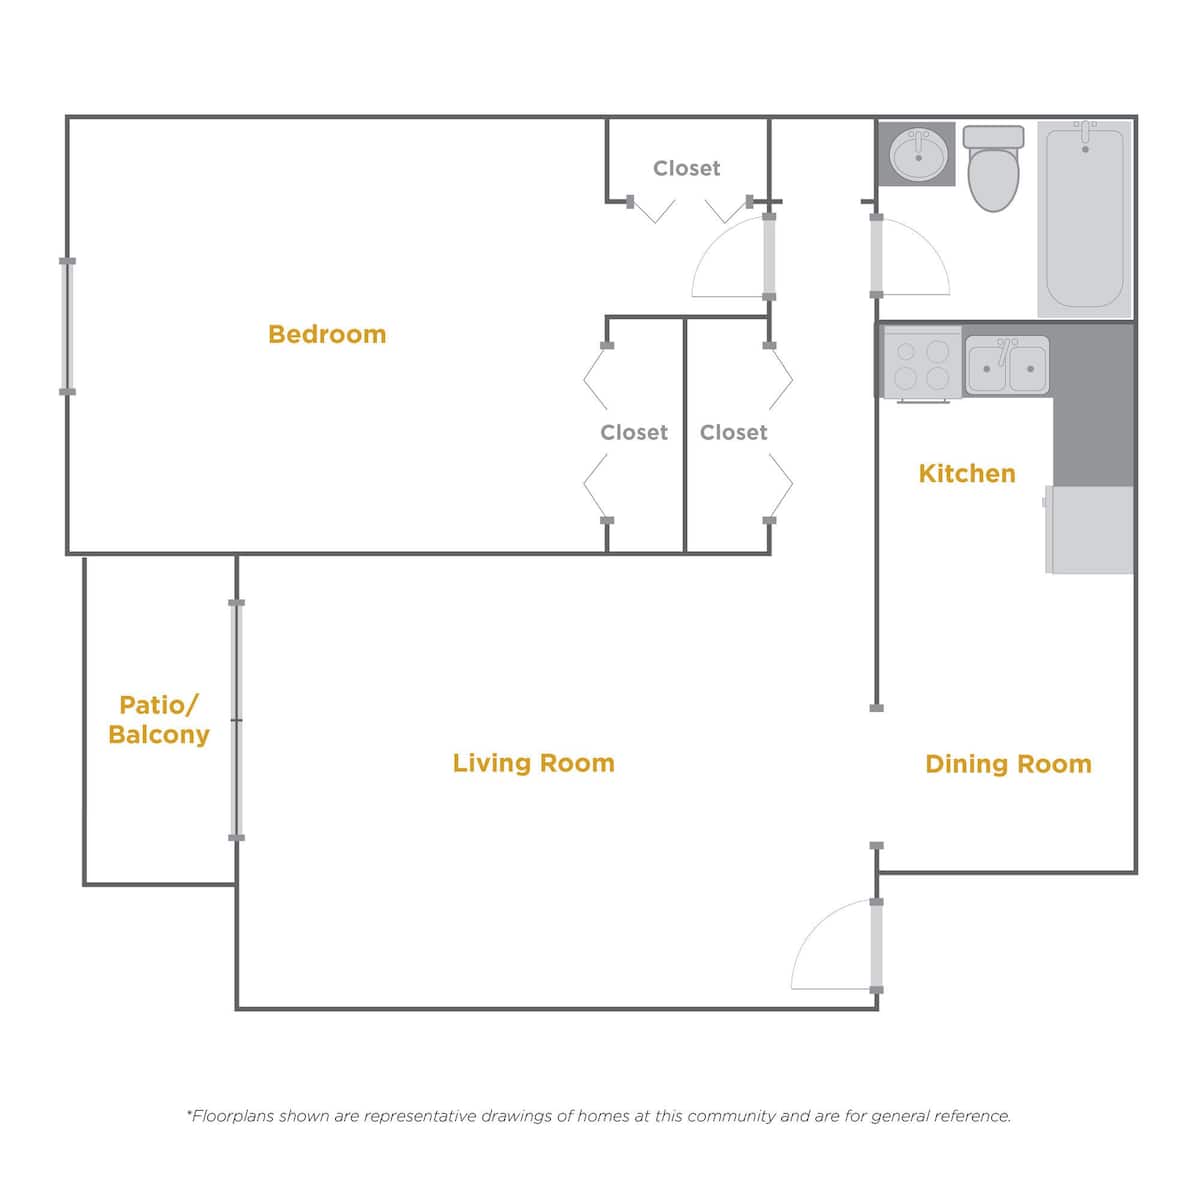 Floorplan diagram for a2_p, showing 1 bedroom